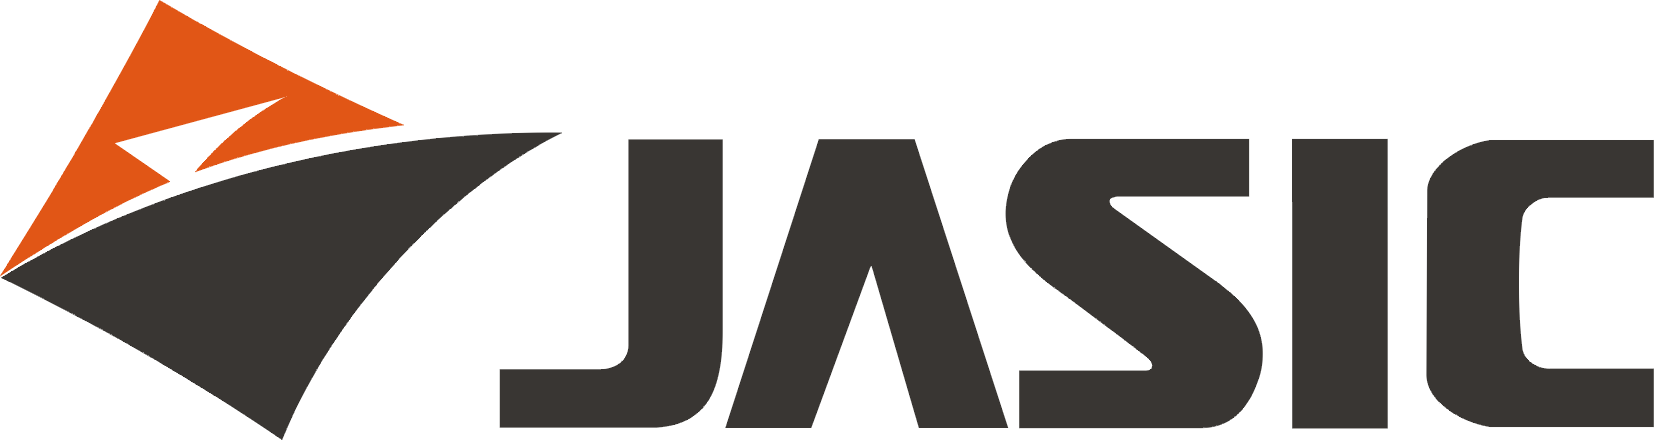 Logo JASIC